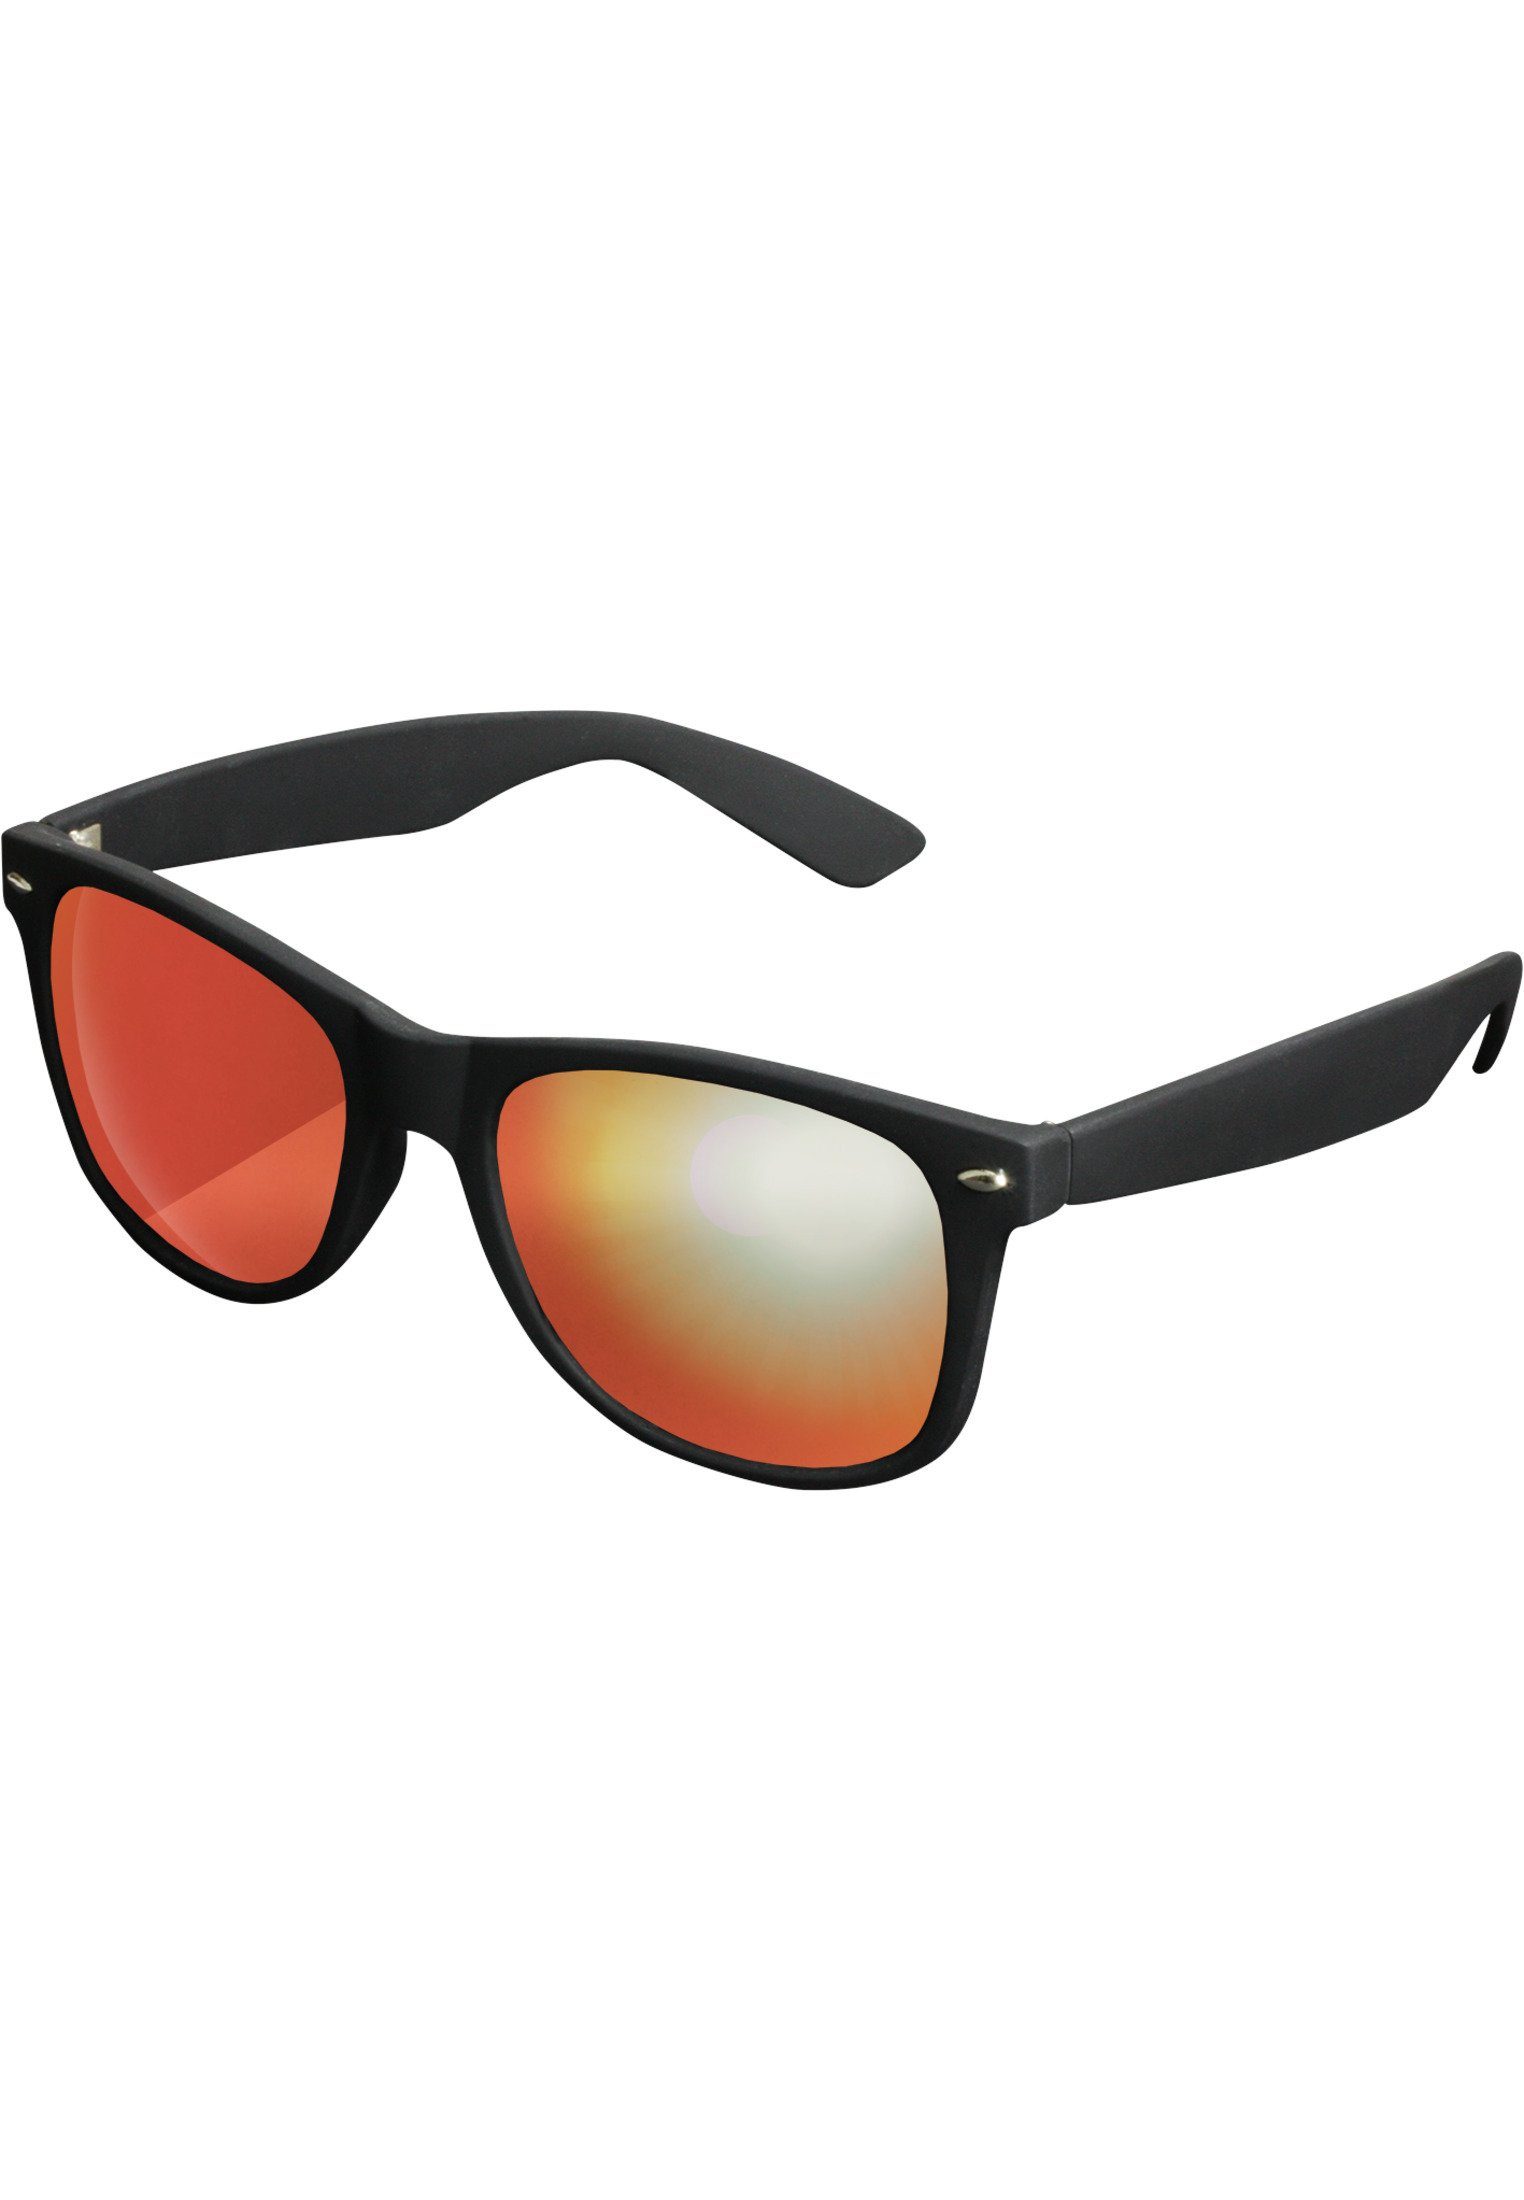 Likoma blk/red Sunglasses MSTRDS Accessoires Mirror Sonnenbrille